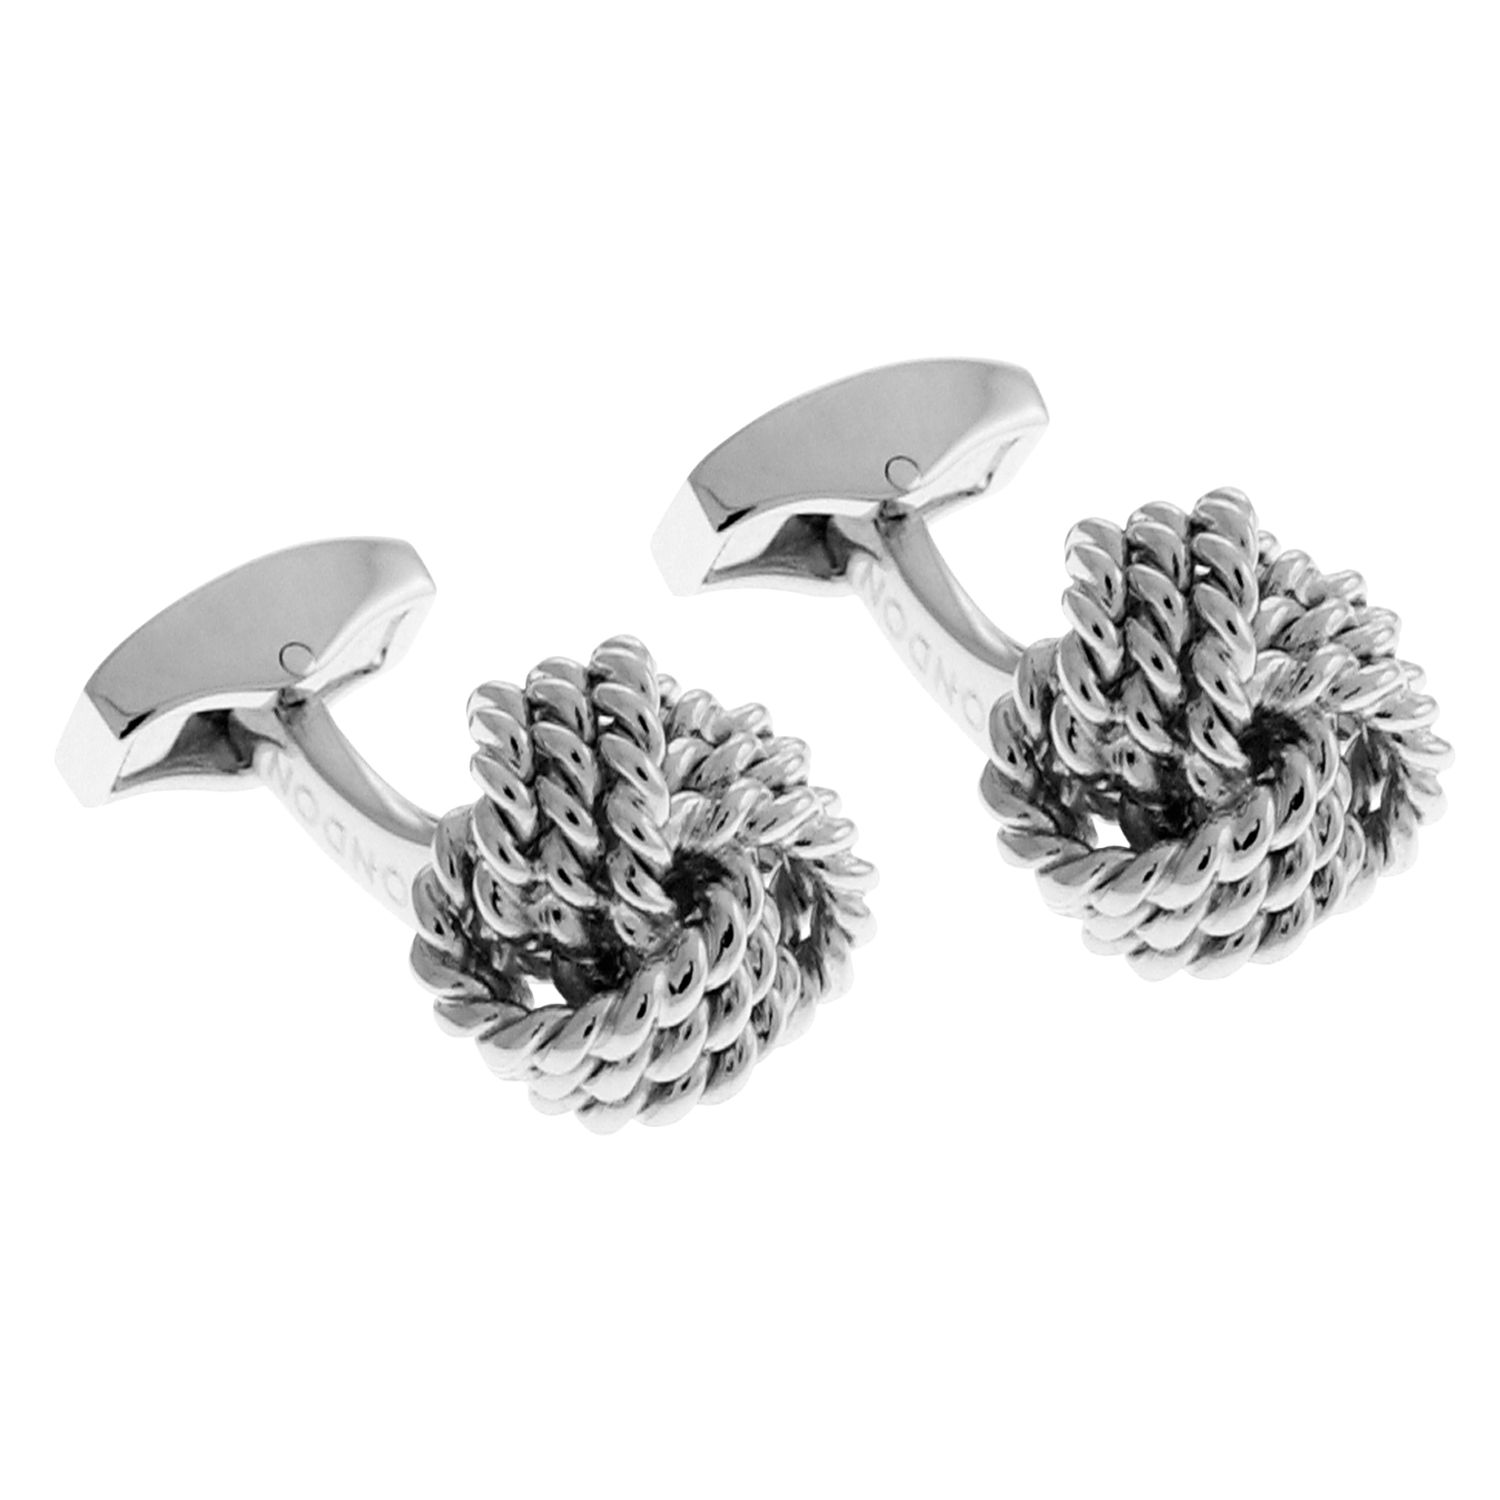 Tateossian Woven Knot Cufflinks, Silver